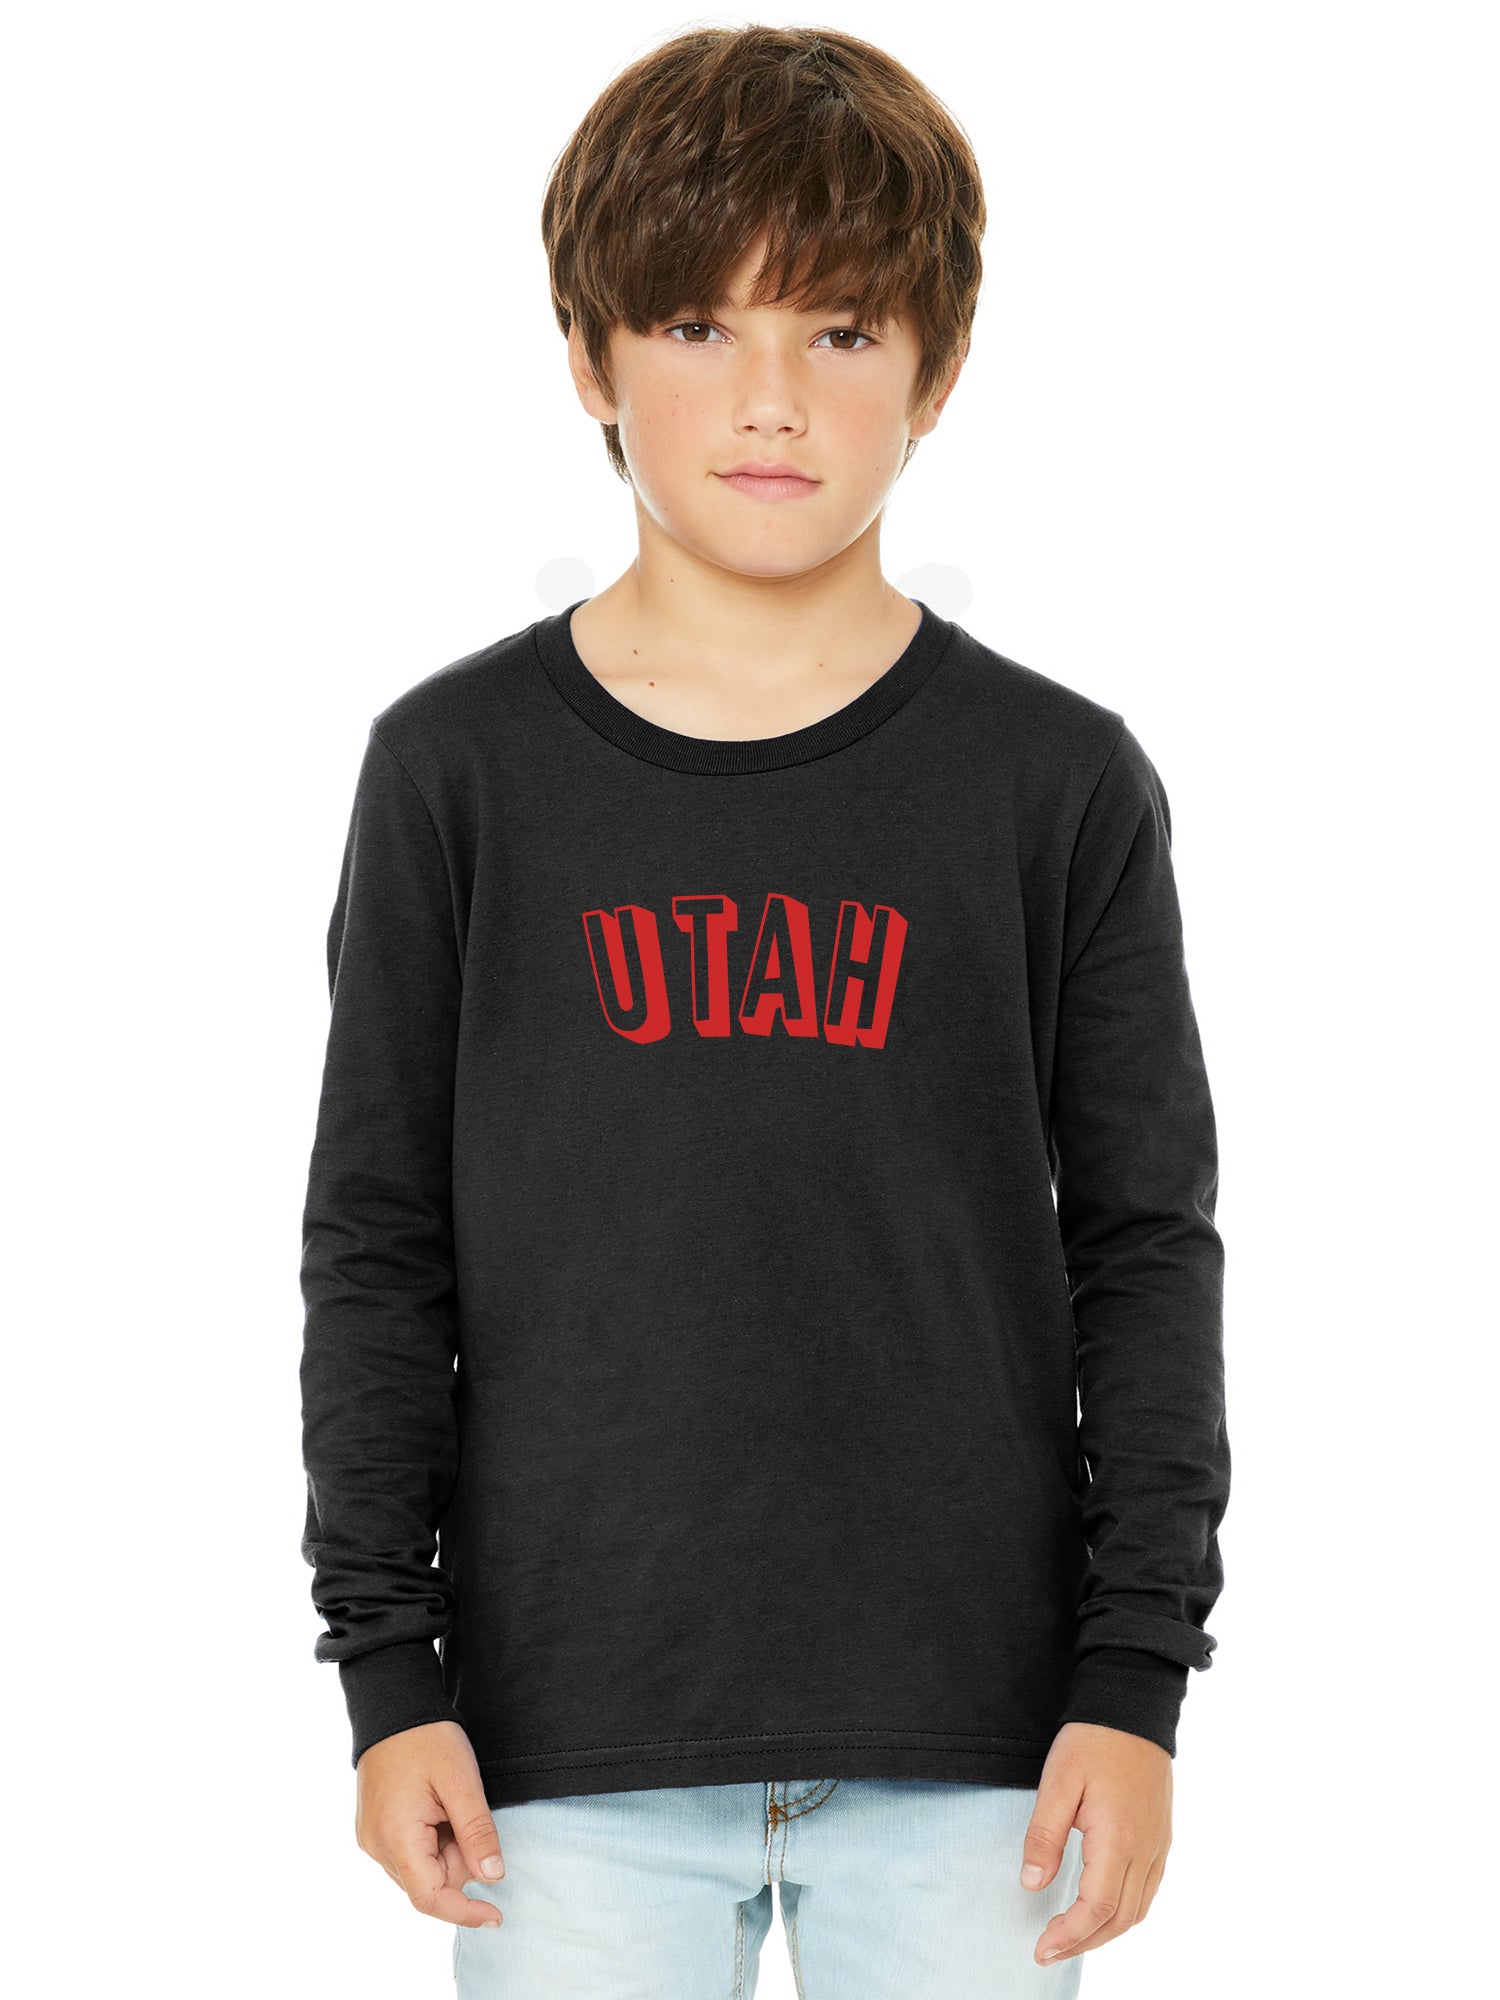 Utah Clothing